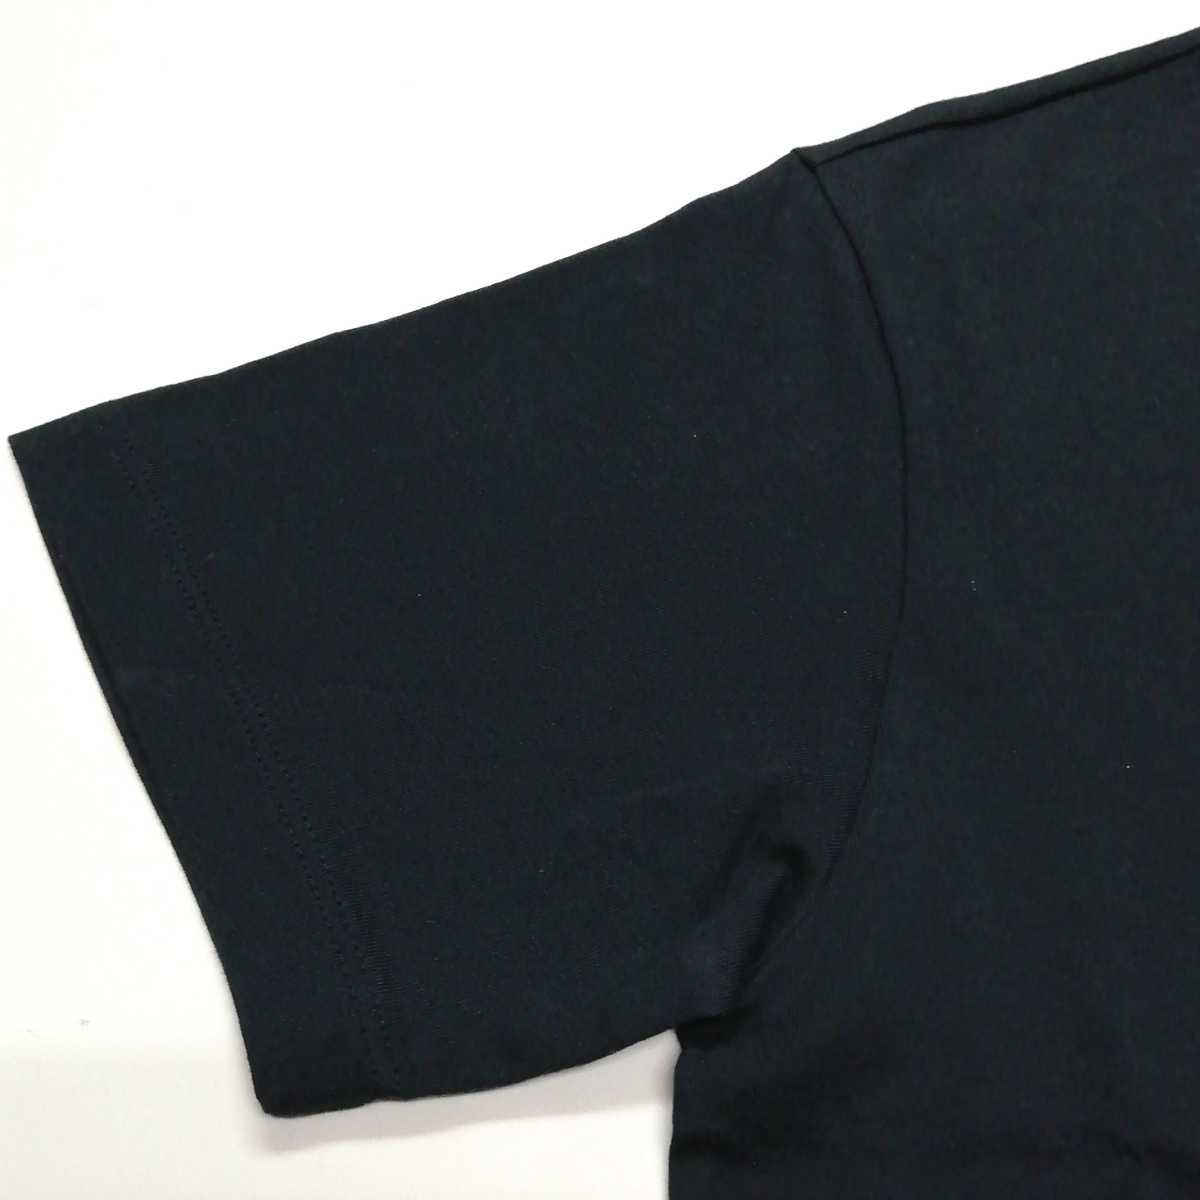 * new goods / regular goods *[COACH*89791-BLK] Coach store complete sale goods great popularity! men's wear tops short sleeves T-shirt black black last 1 point!!